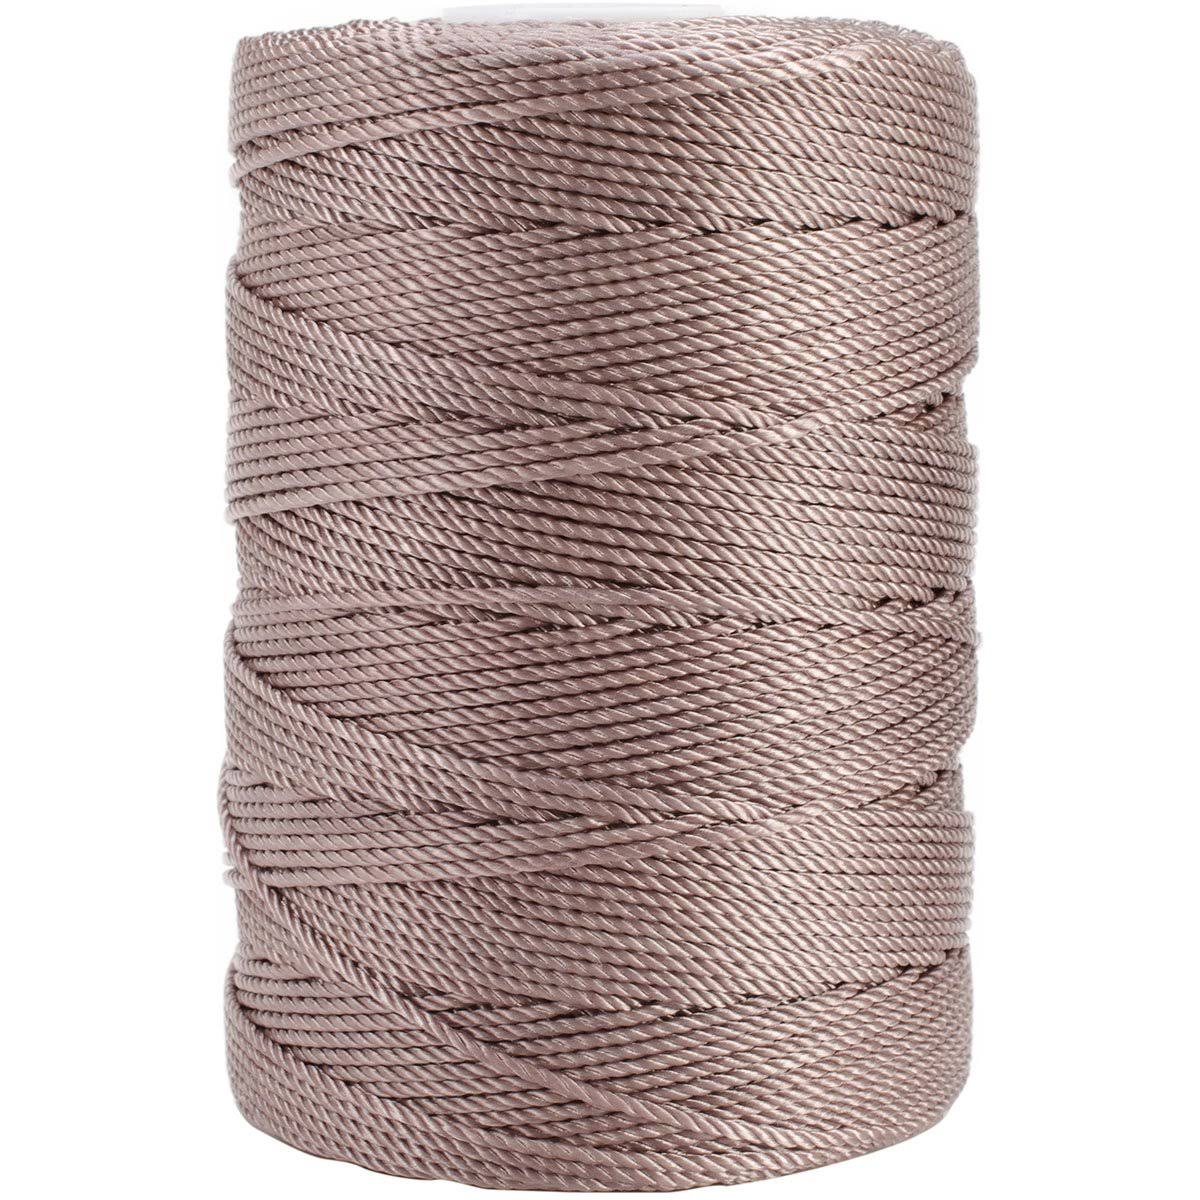 Iris Nylon Thread - Taupe, Size 18, 197yds